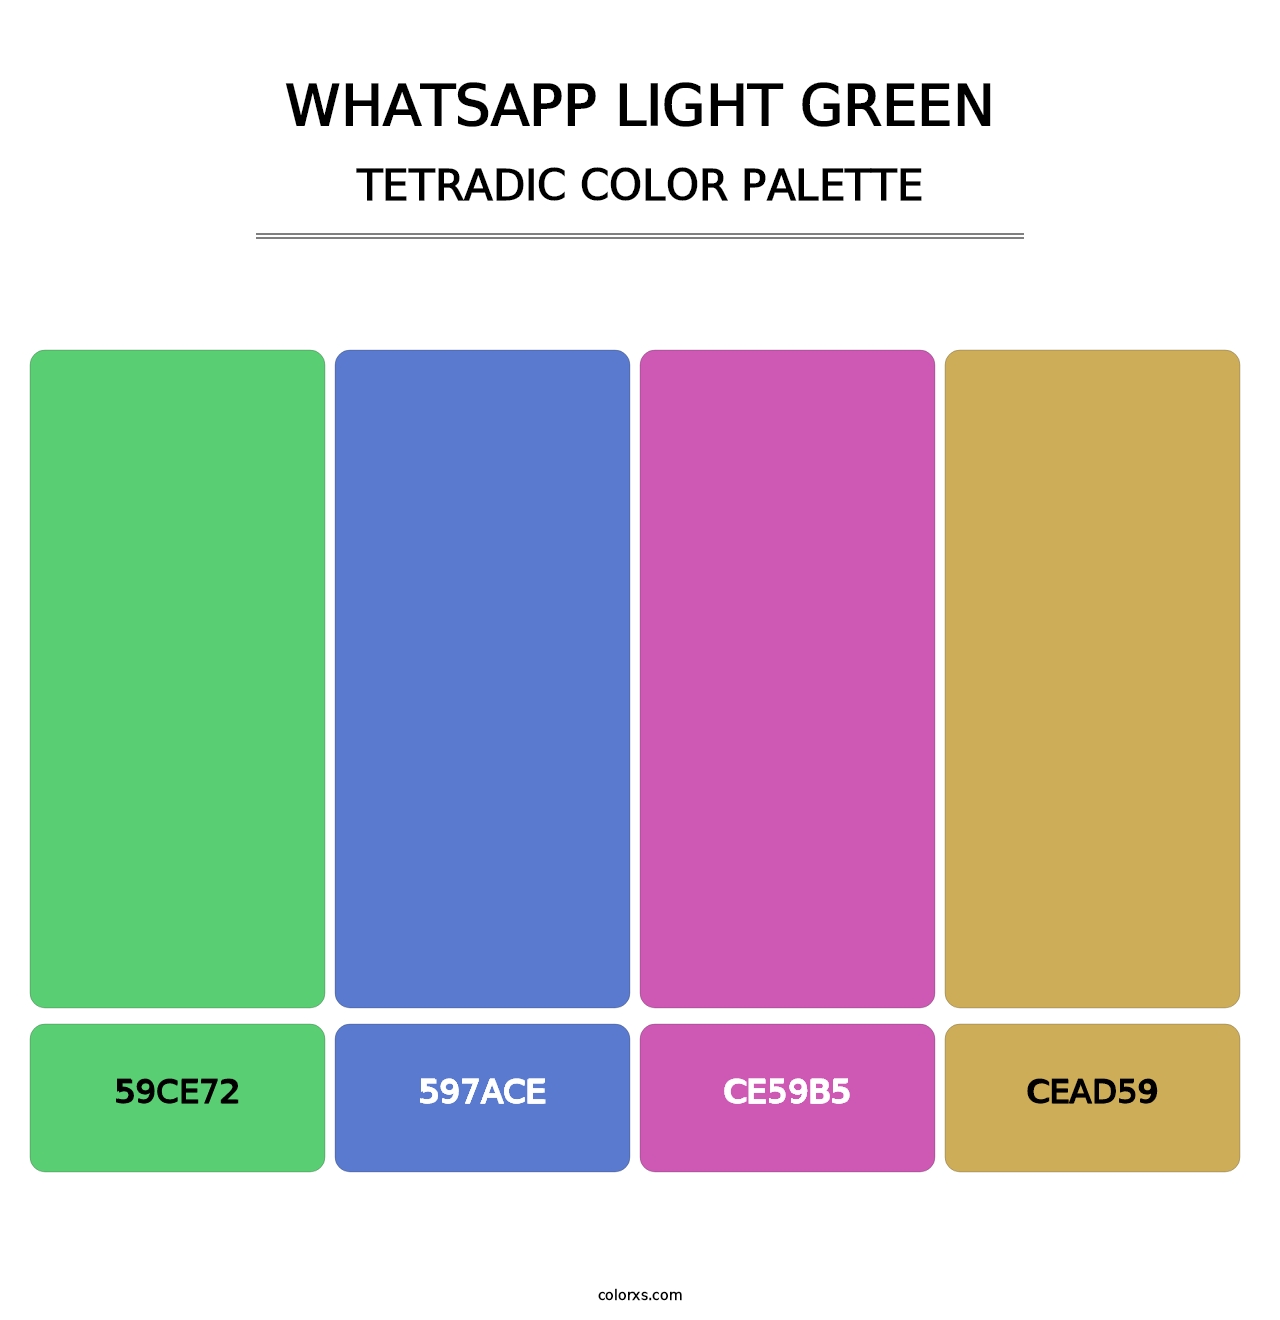 WhatsApp Light Green - Tetradic Color Palette